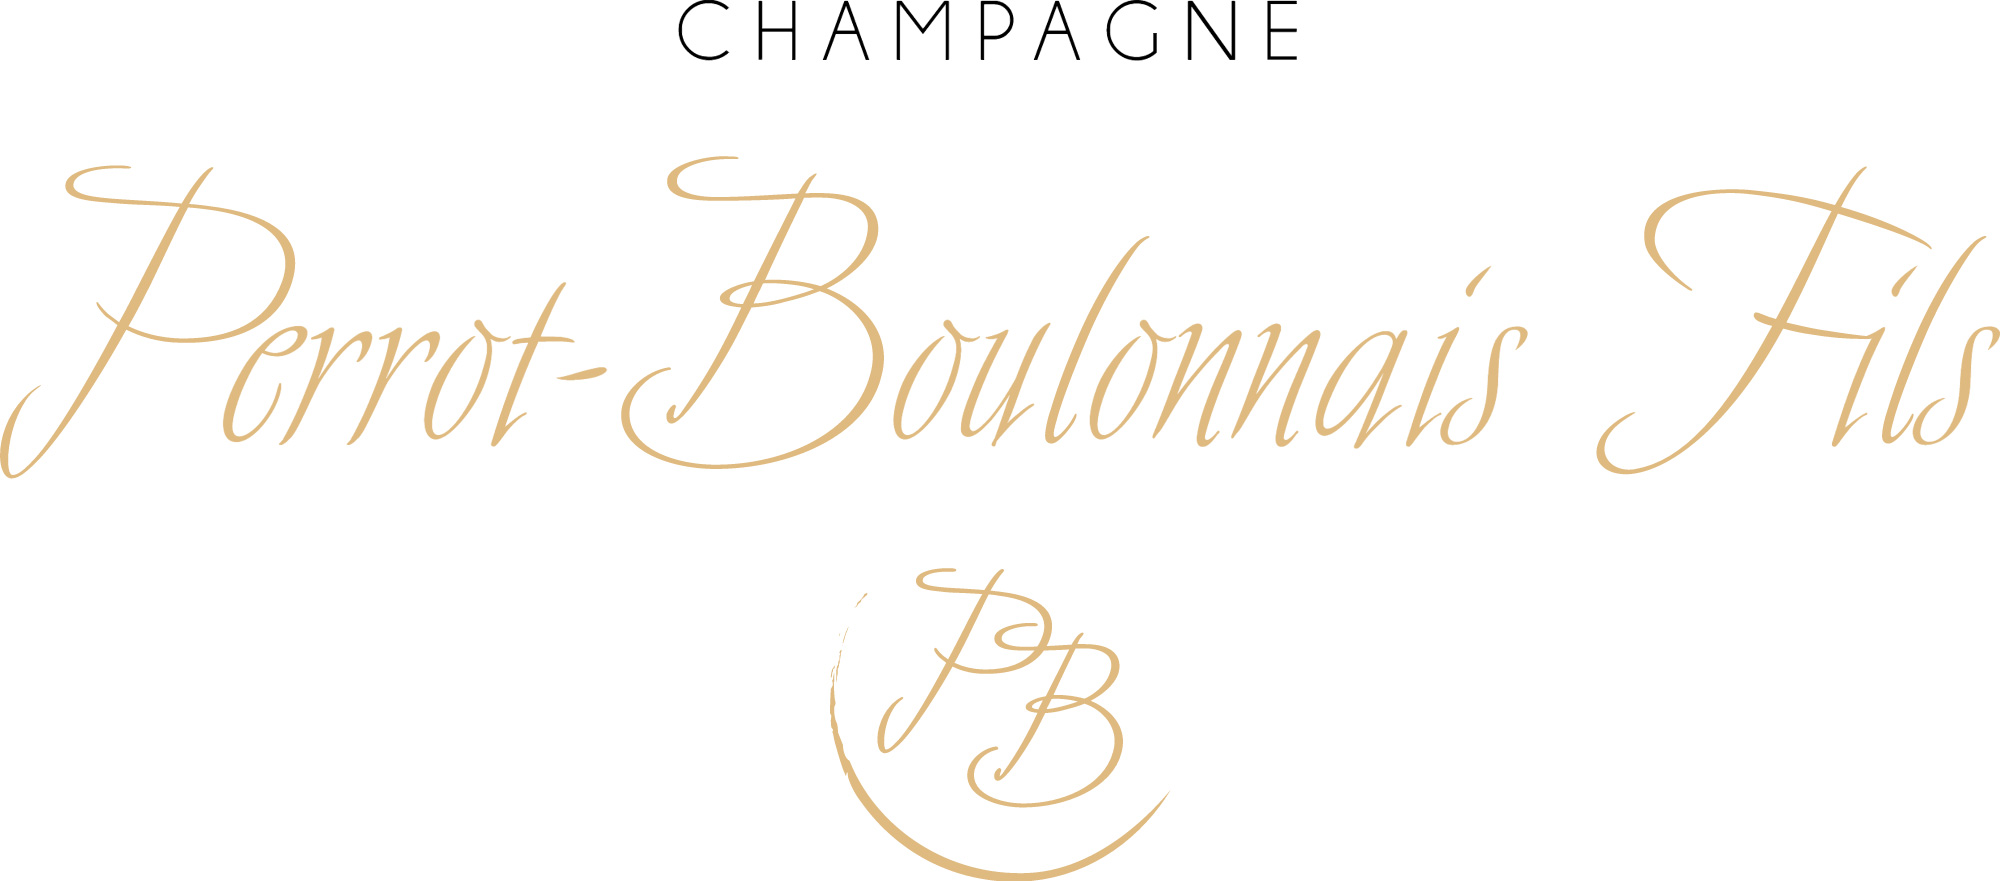 Champagne Perrot-Boulonnais Fils